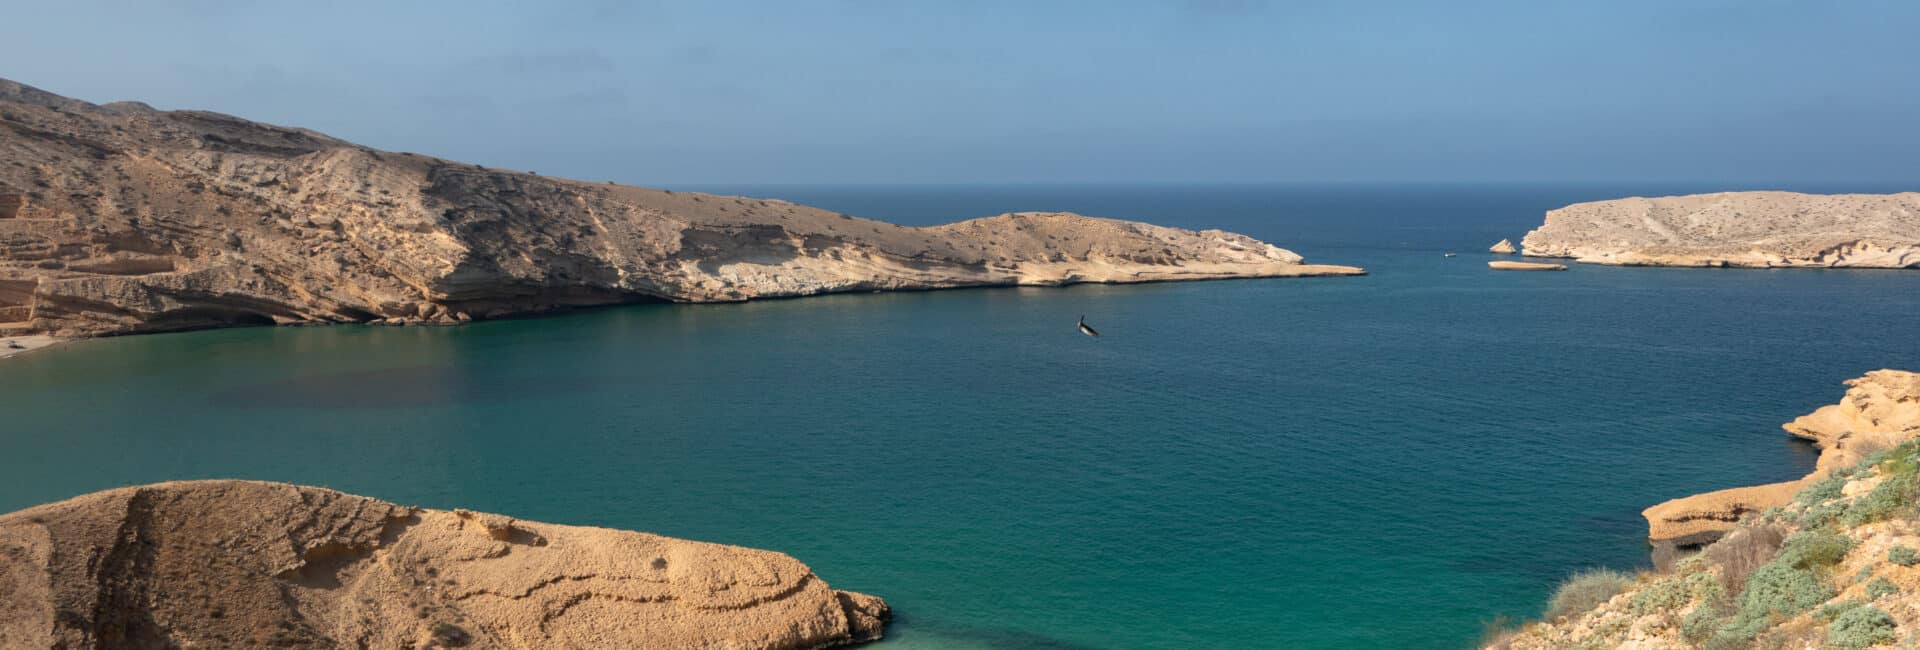 Jumeirah Muscat Bay - Bay View Landscape